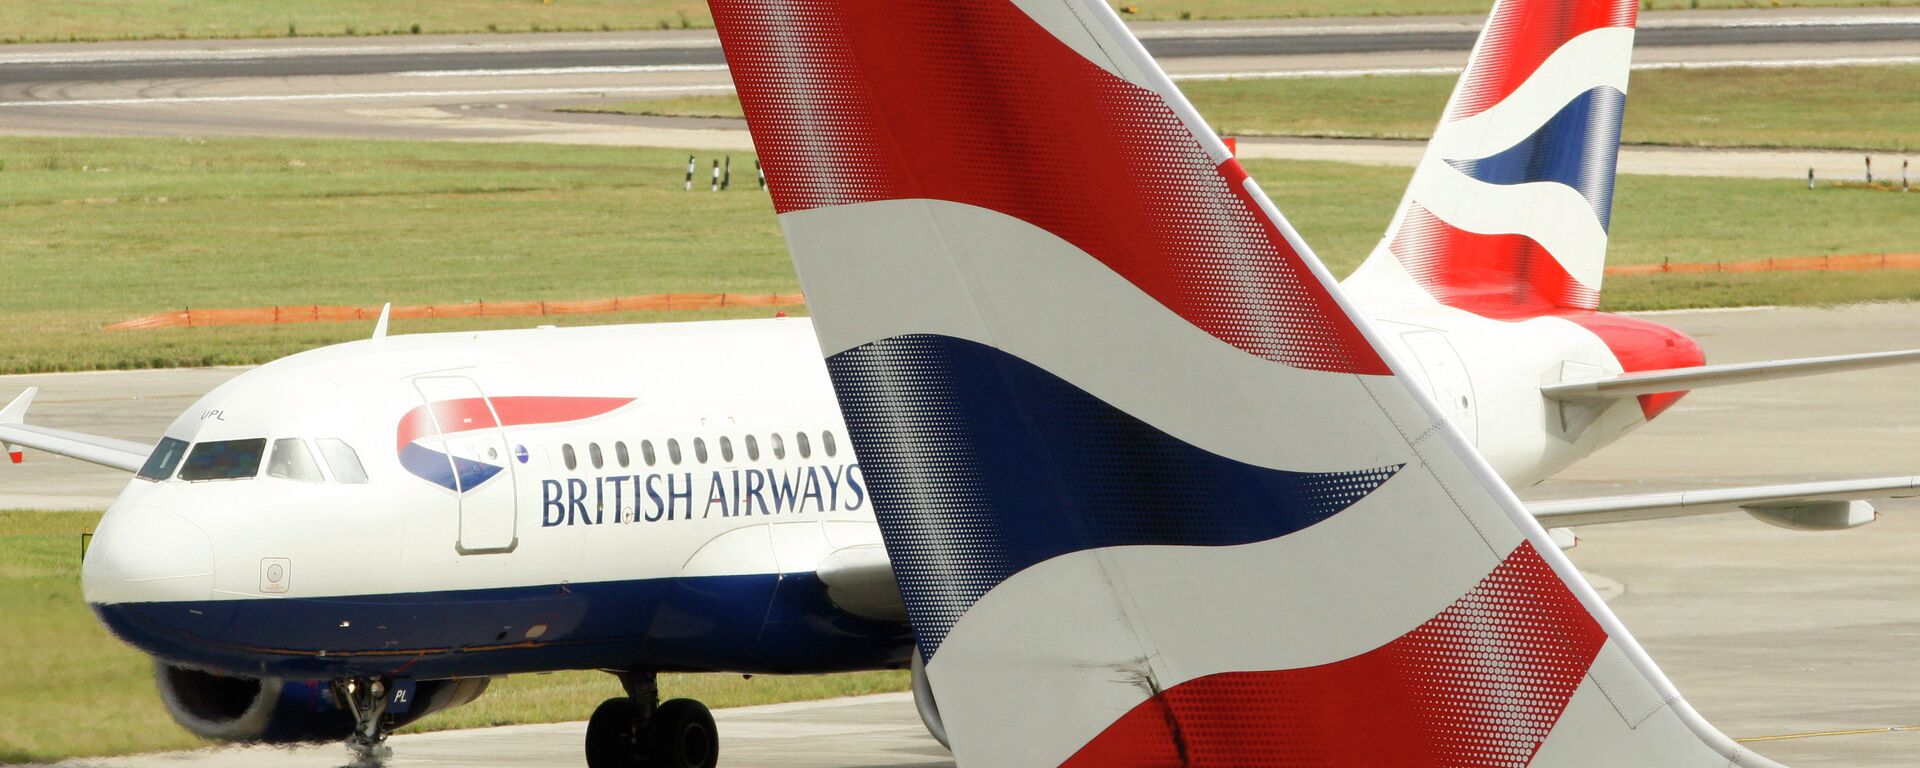 British Airways airplanes are seen at Heathrow Airport in London. - Sputnik International, 1920, 22.07.2022